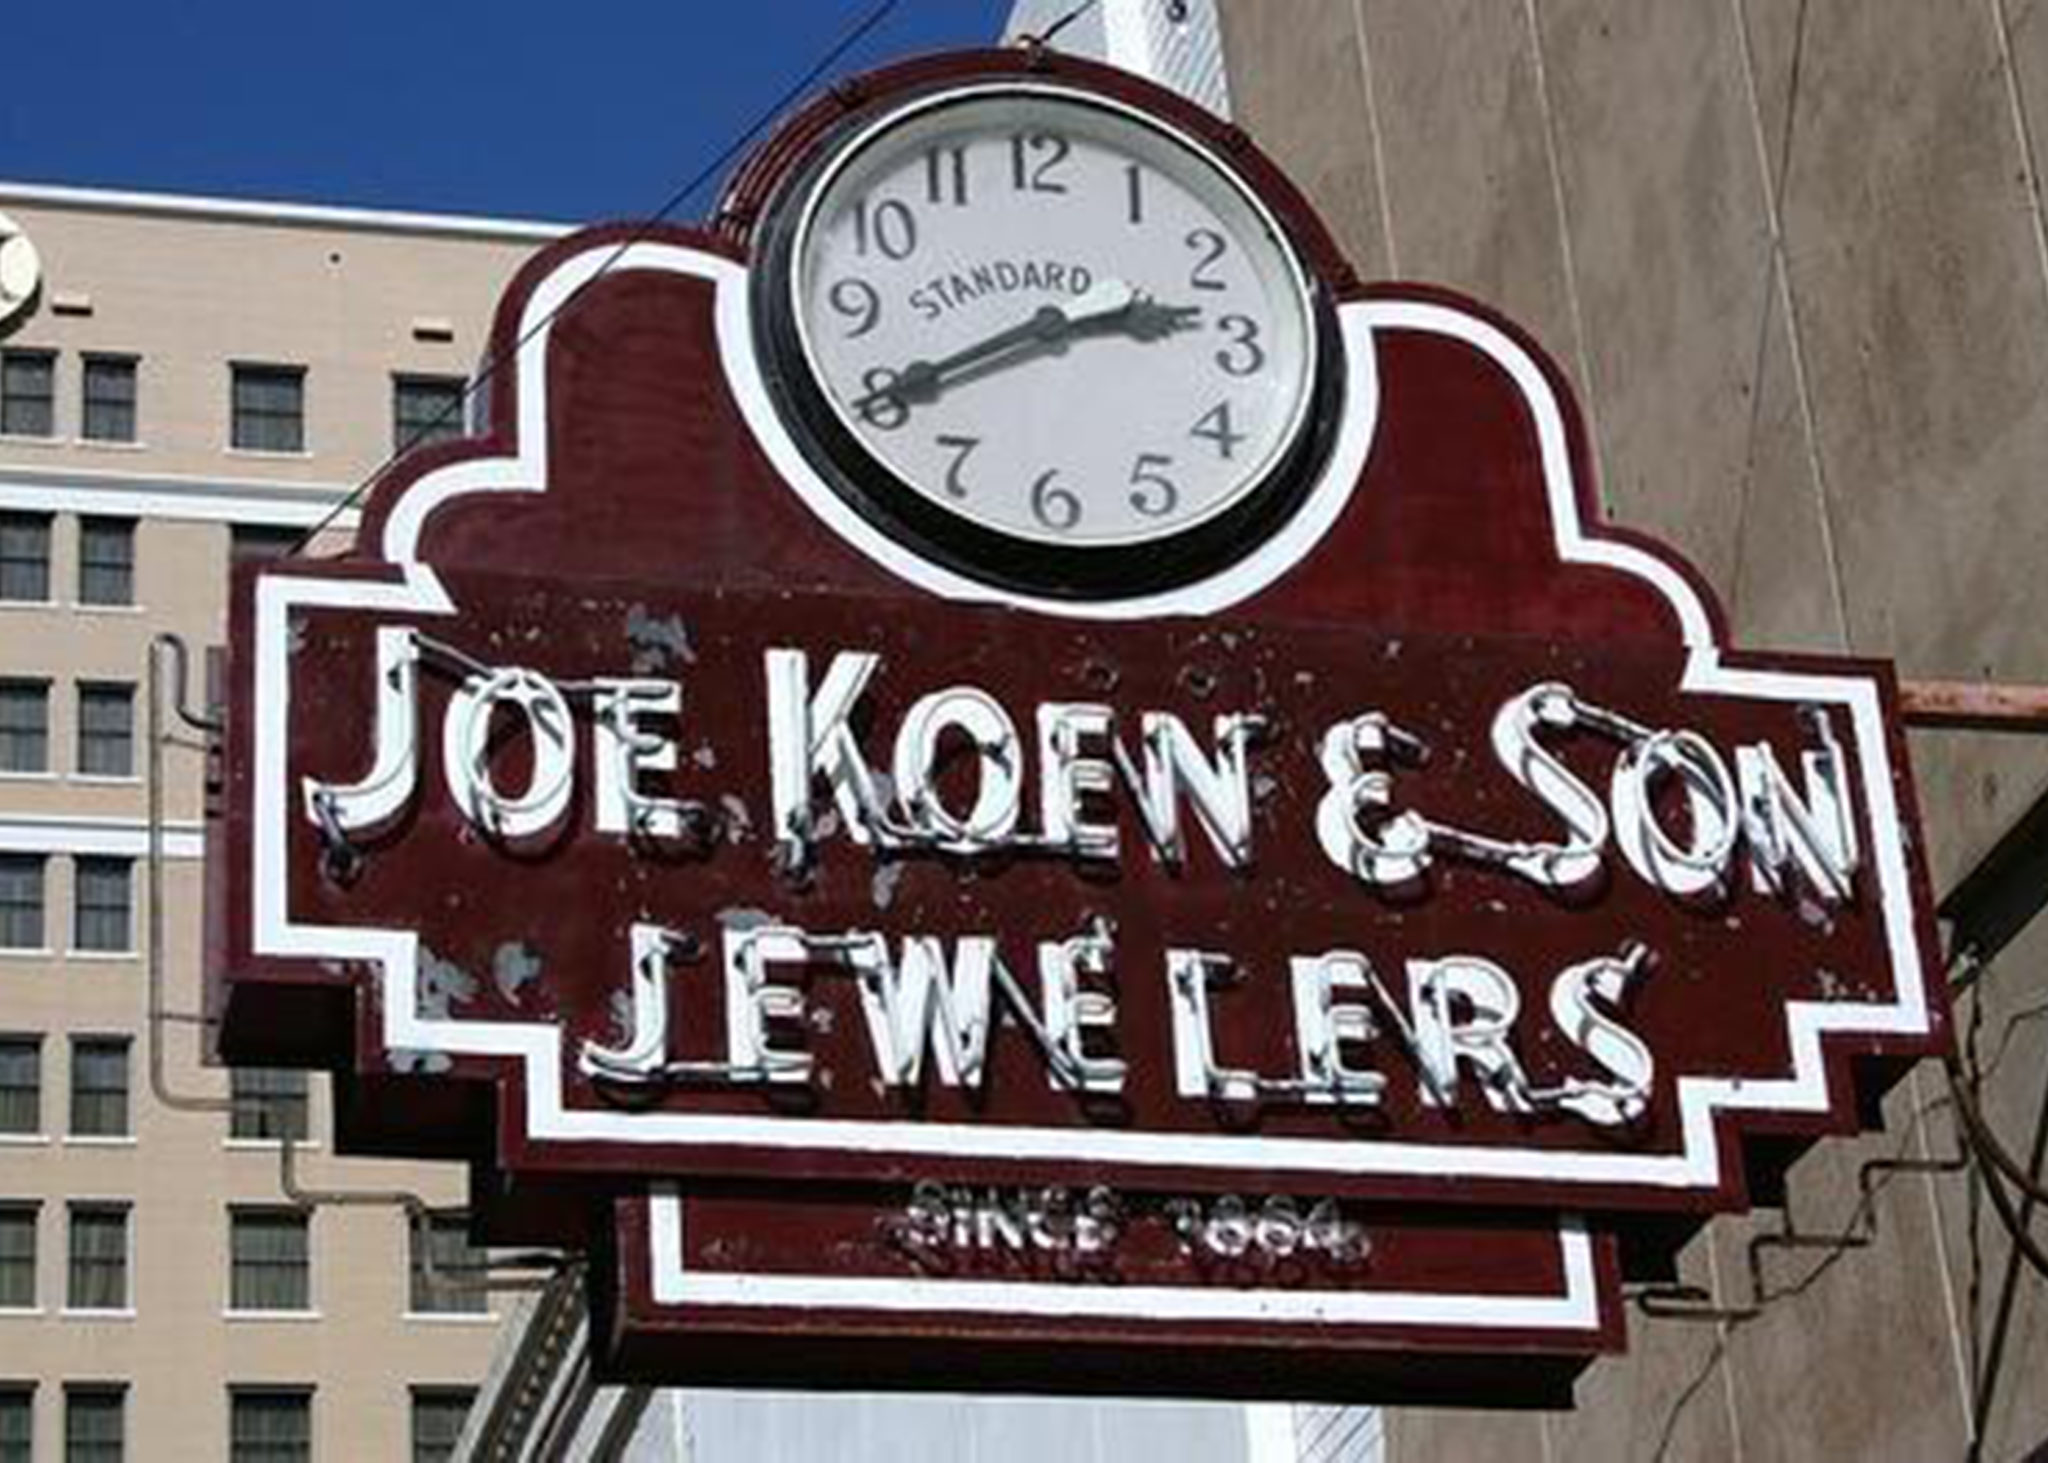 Joe Koen & Son Jewelers sign